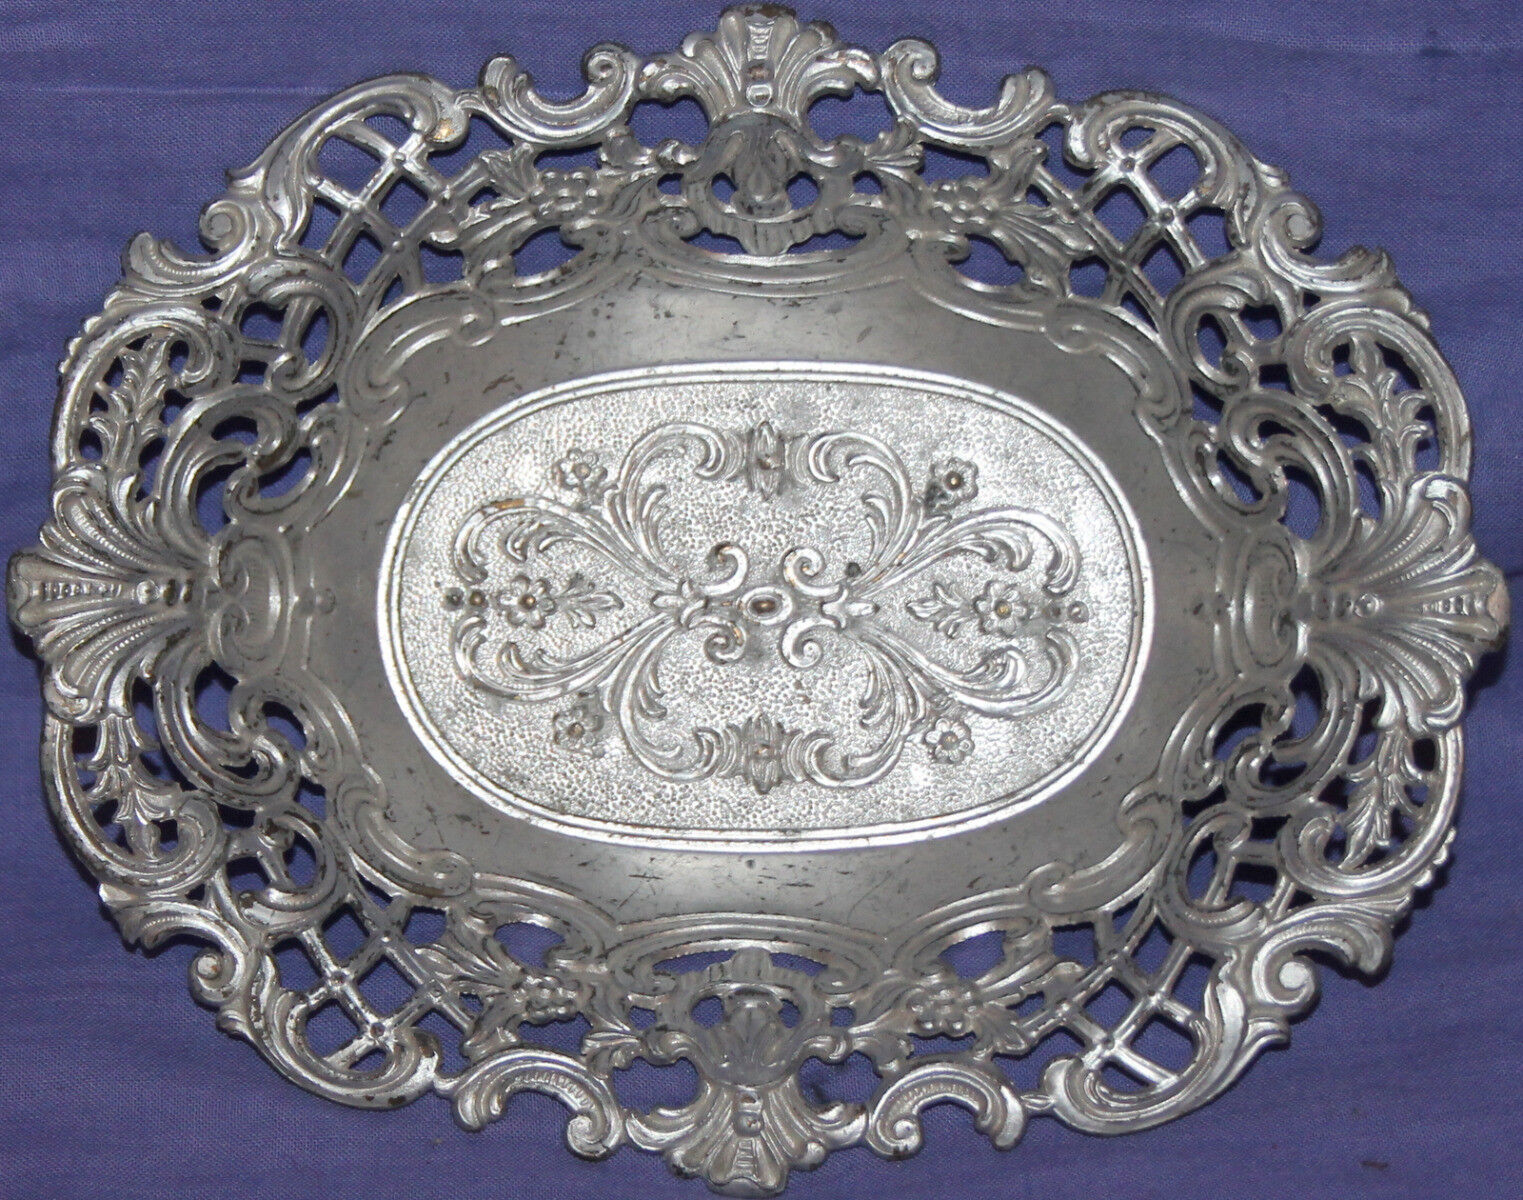 Vintage French Mod Dep ornate floral metal footed bowl